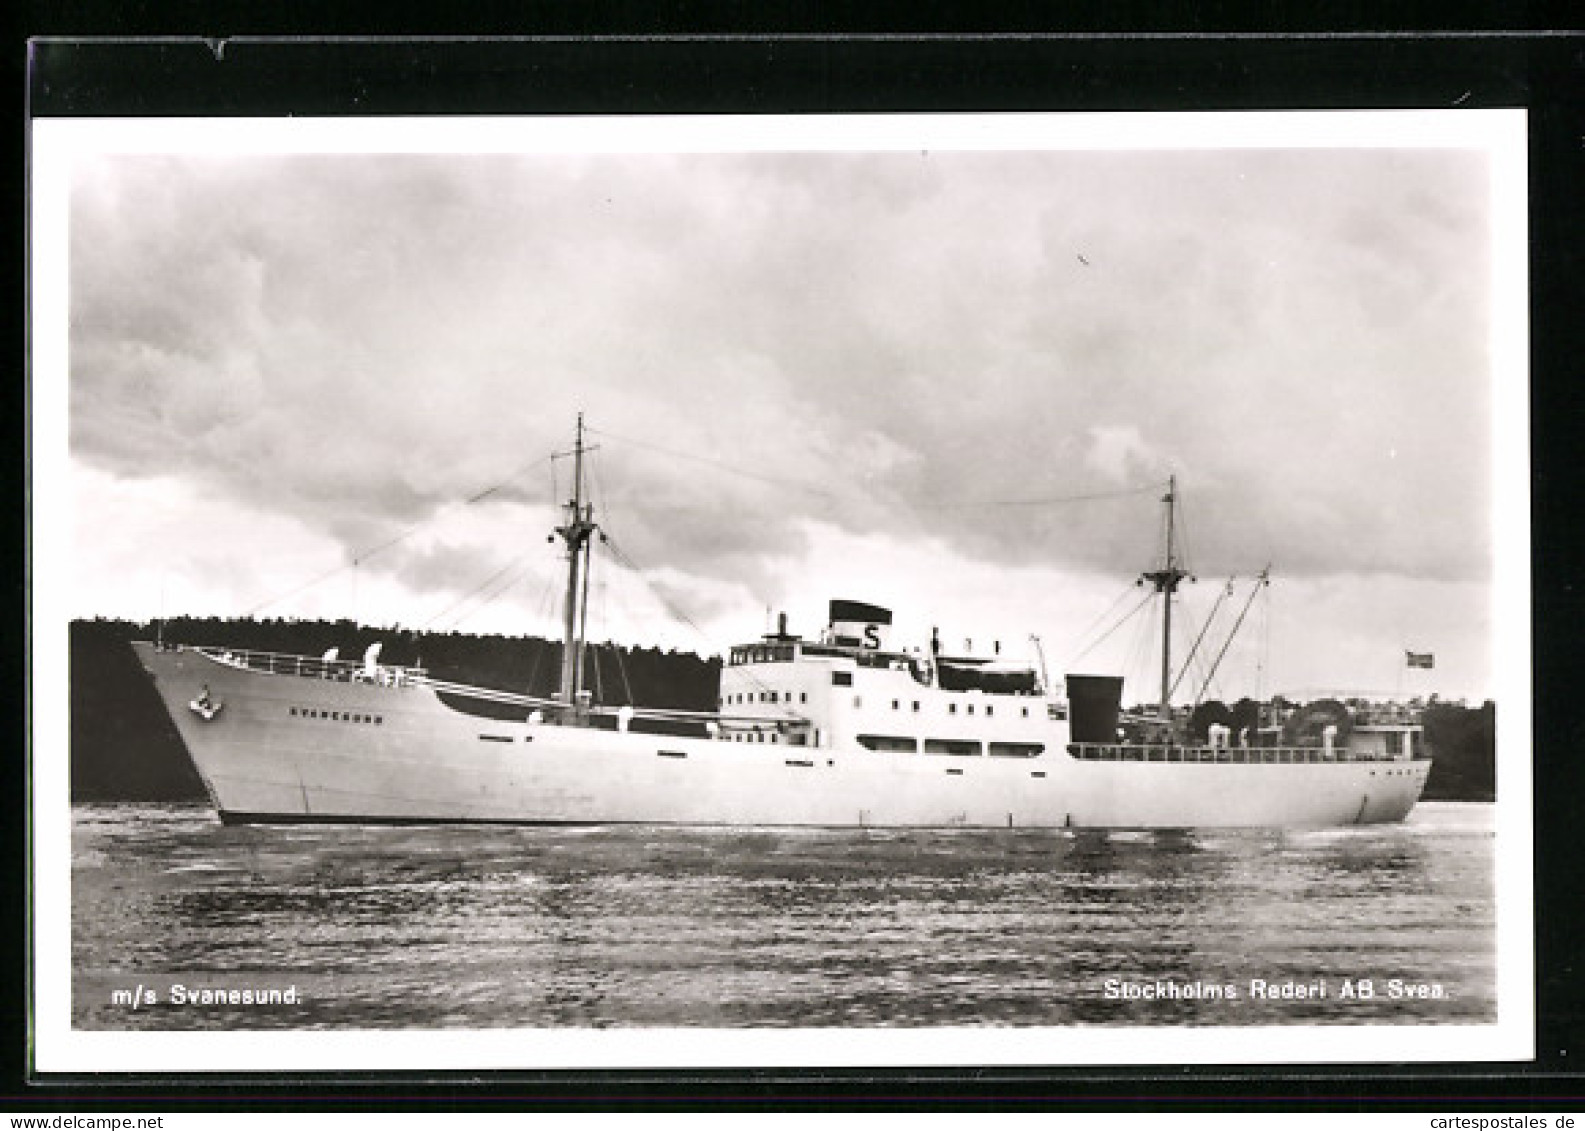 AK Handelsschiff MS Svandesund, Stockholms Rederi AB Svea  - Cargos